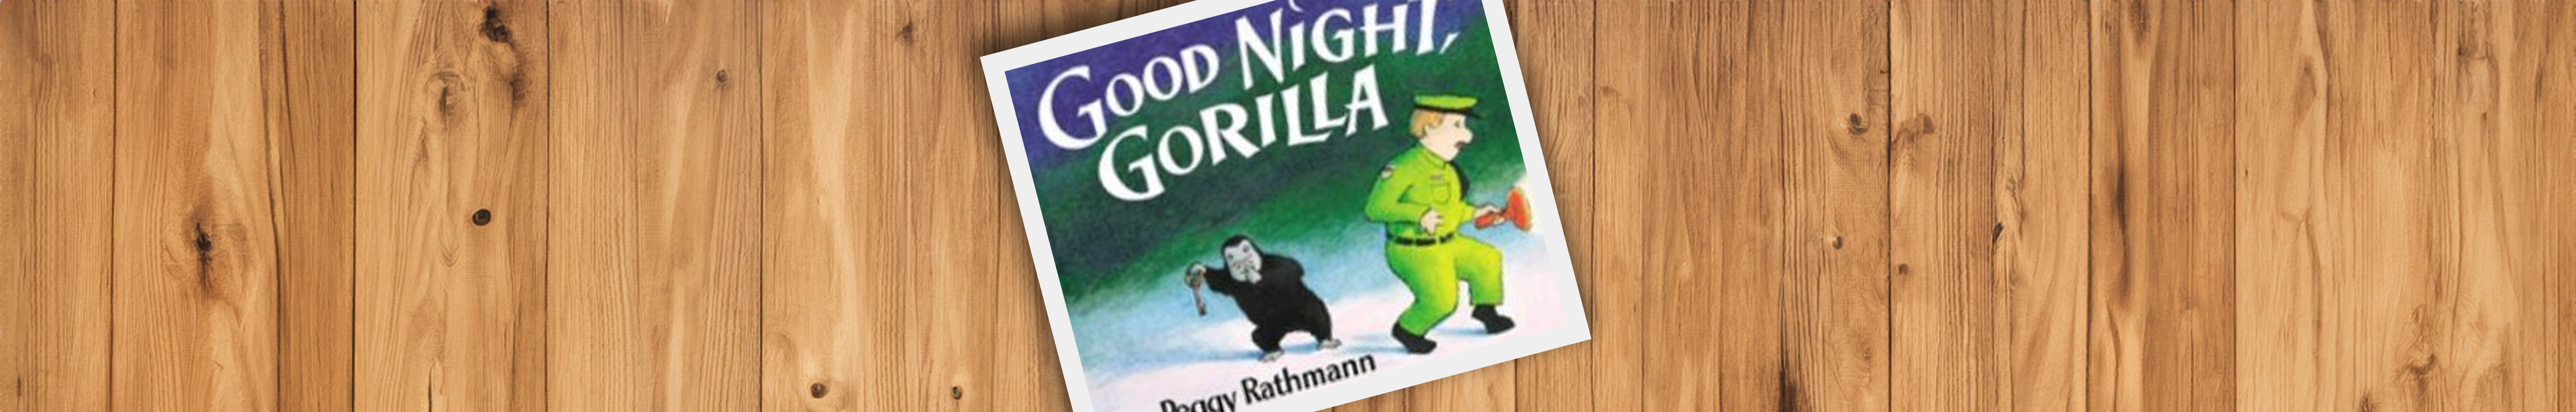 Good night gorilla featured 1920x500